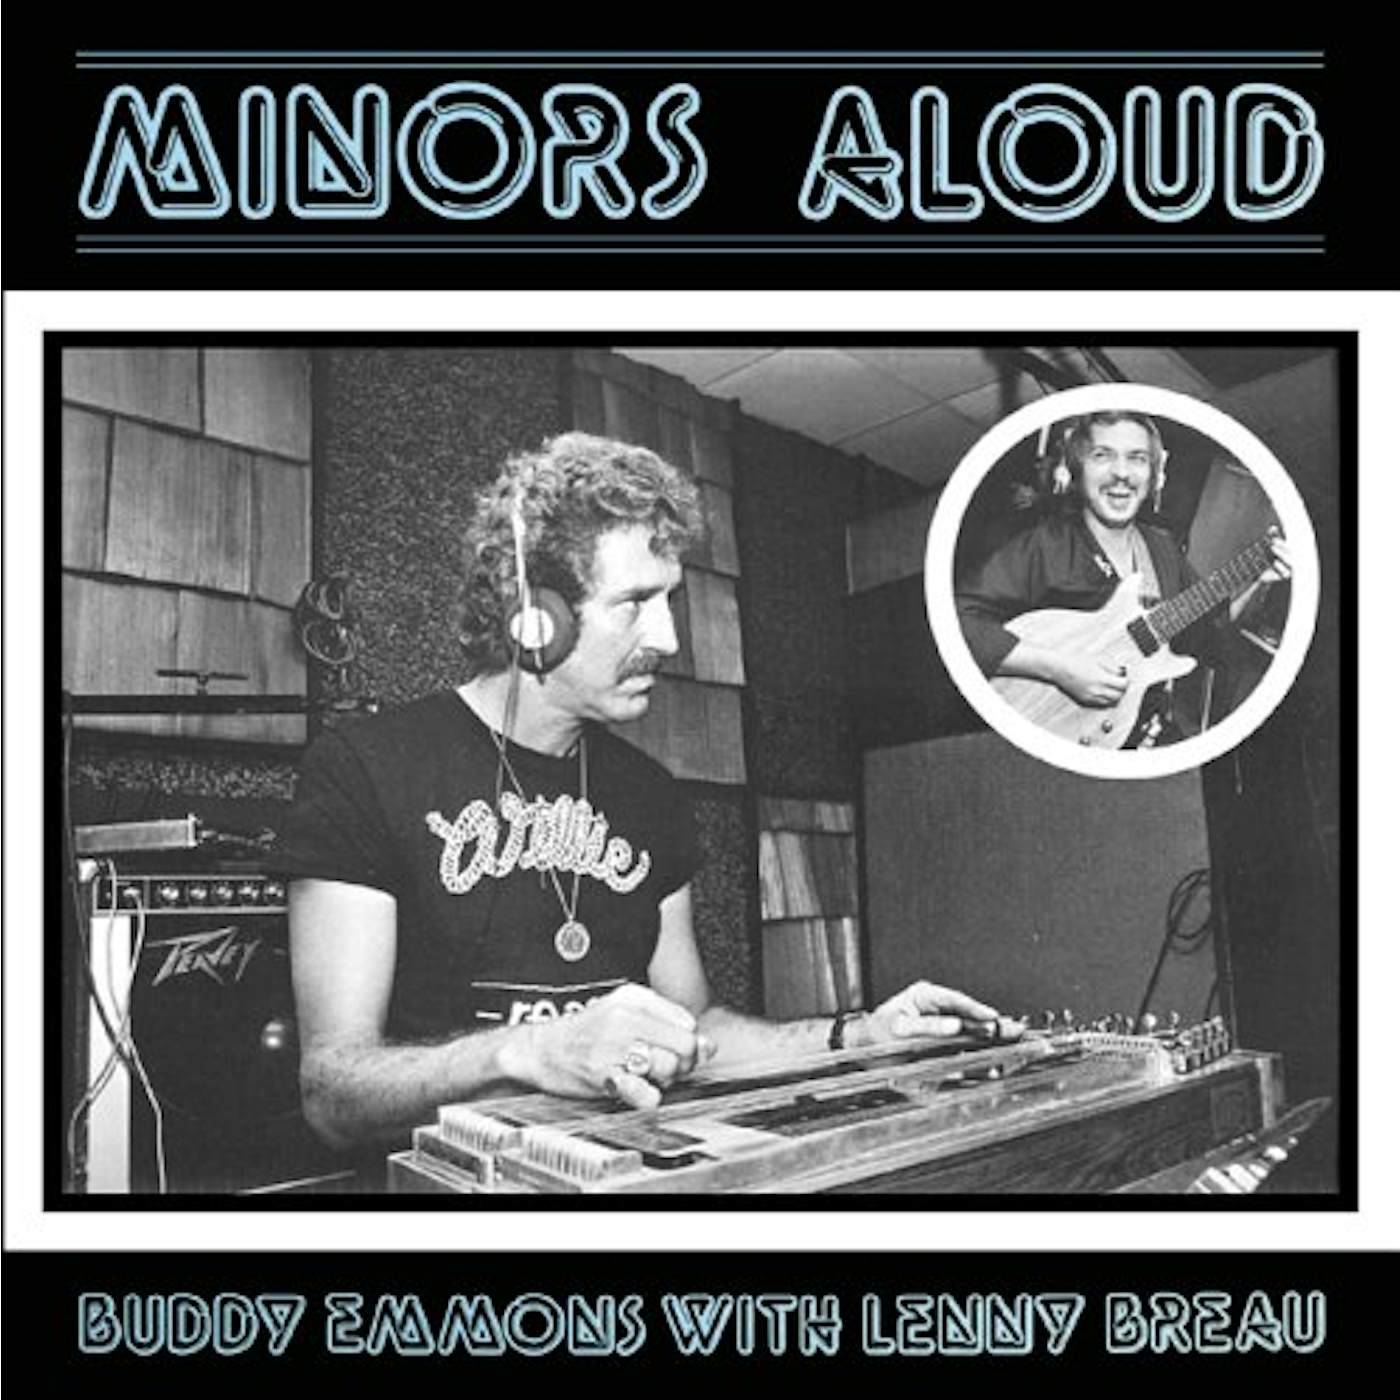 Buddy Emmons MINORS ALOUD CD